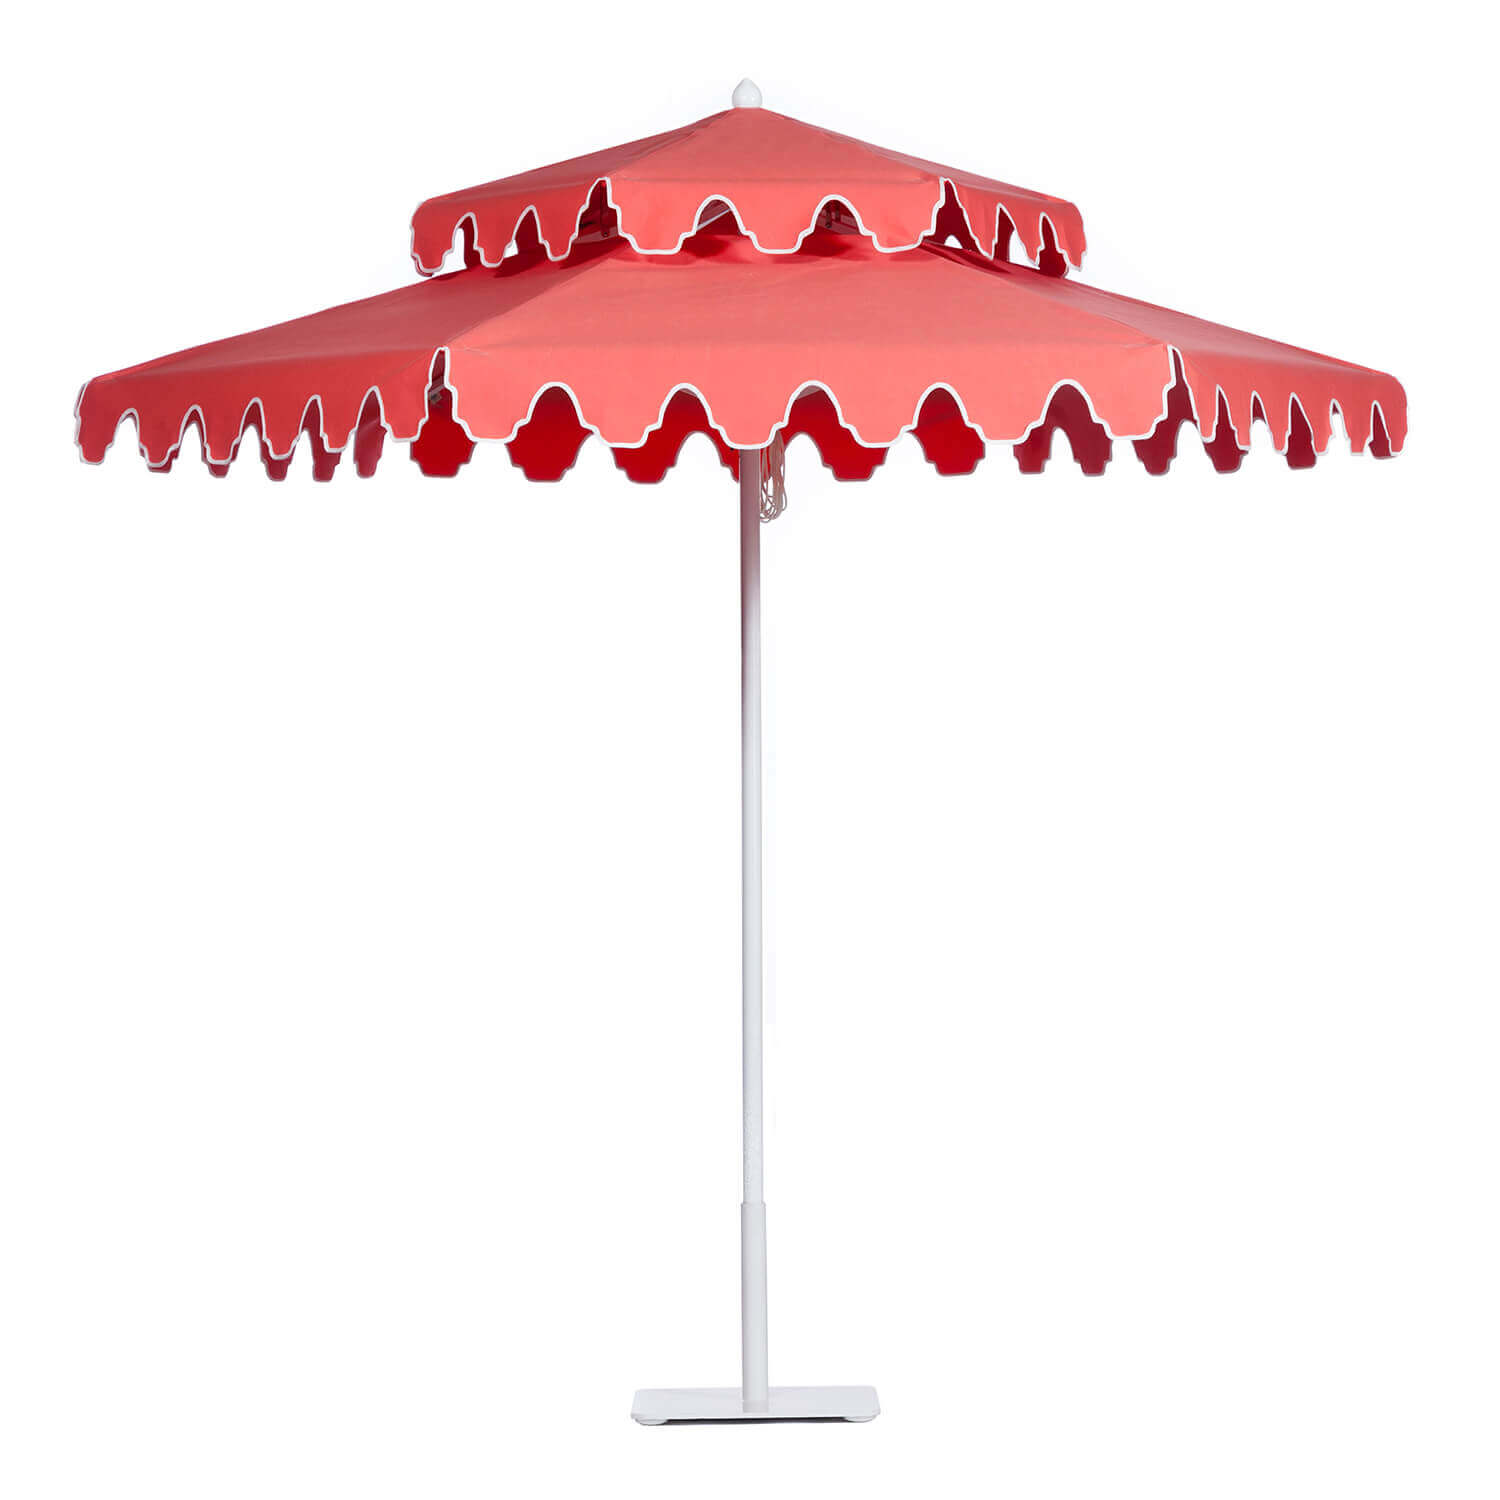 Coral Pink Umbrella Image